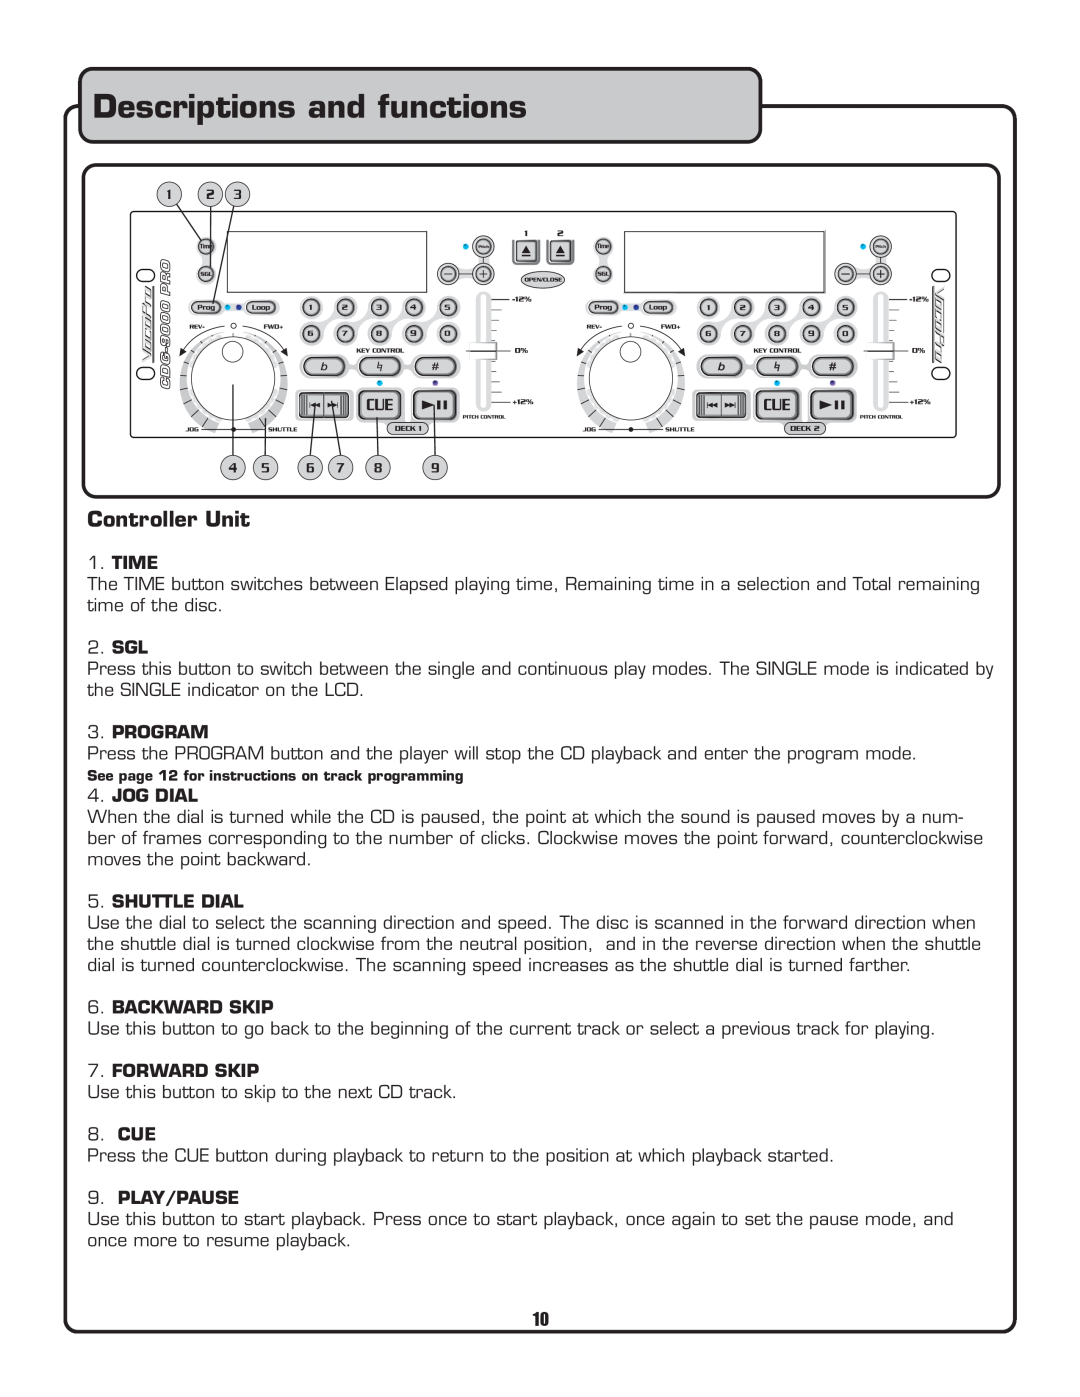 VocoPro CDG-9000 Controller Unit, Descriptions and functions, Time, 2.SGL, Program, Jog Dial, Shuttle Dial, Backward Skip 